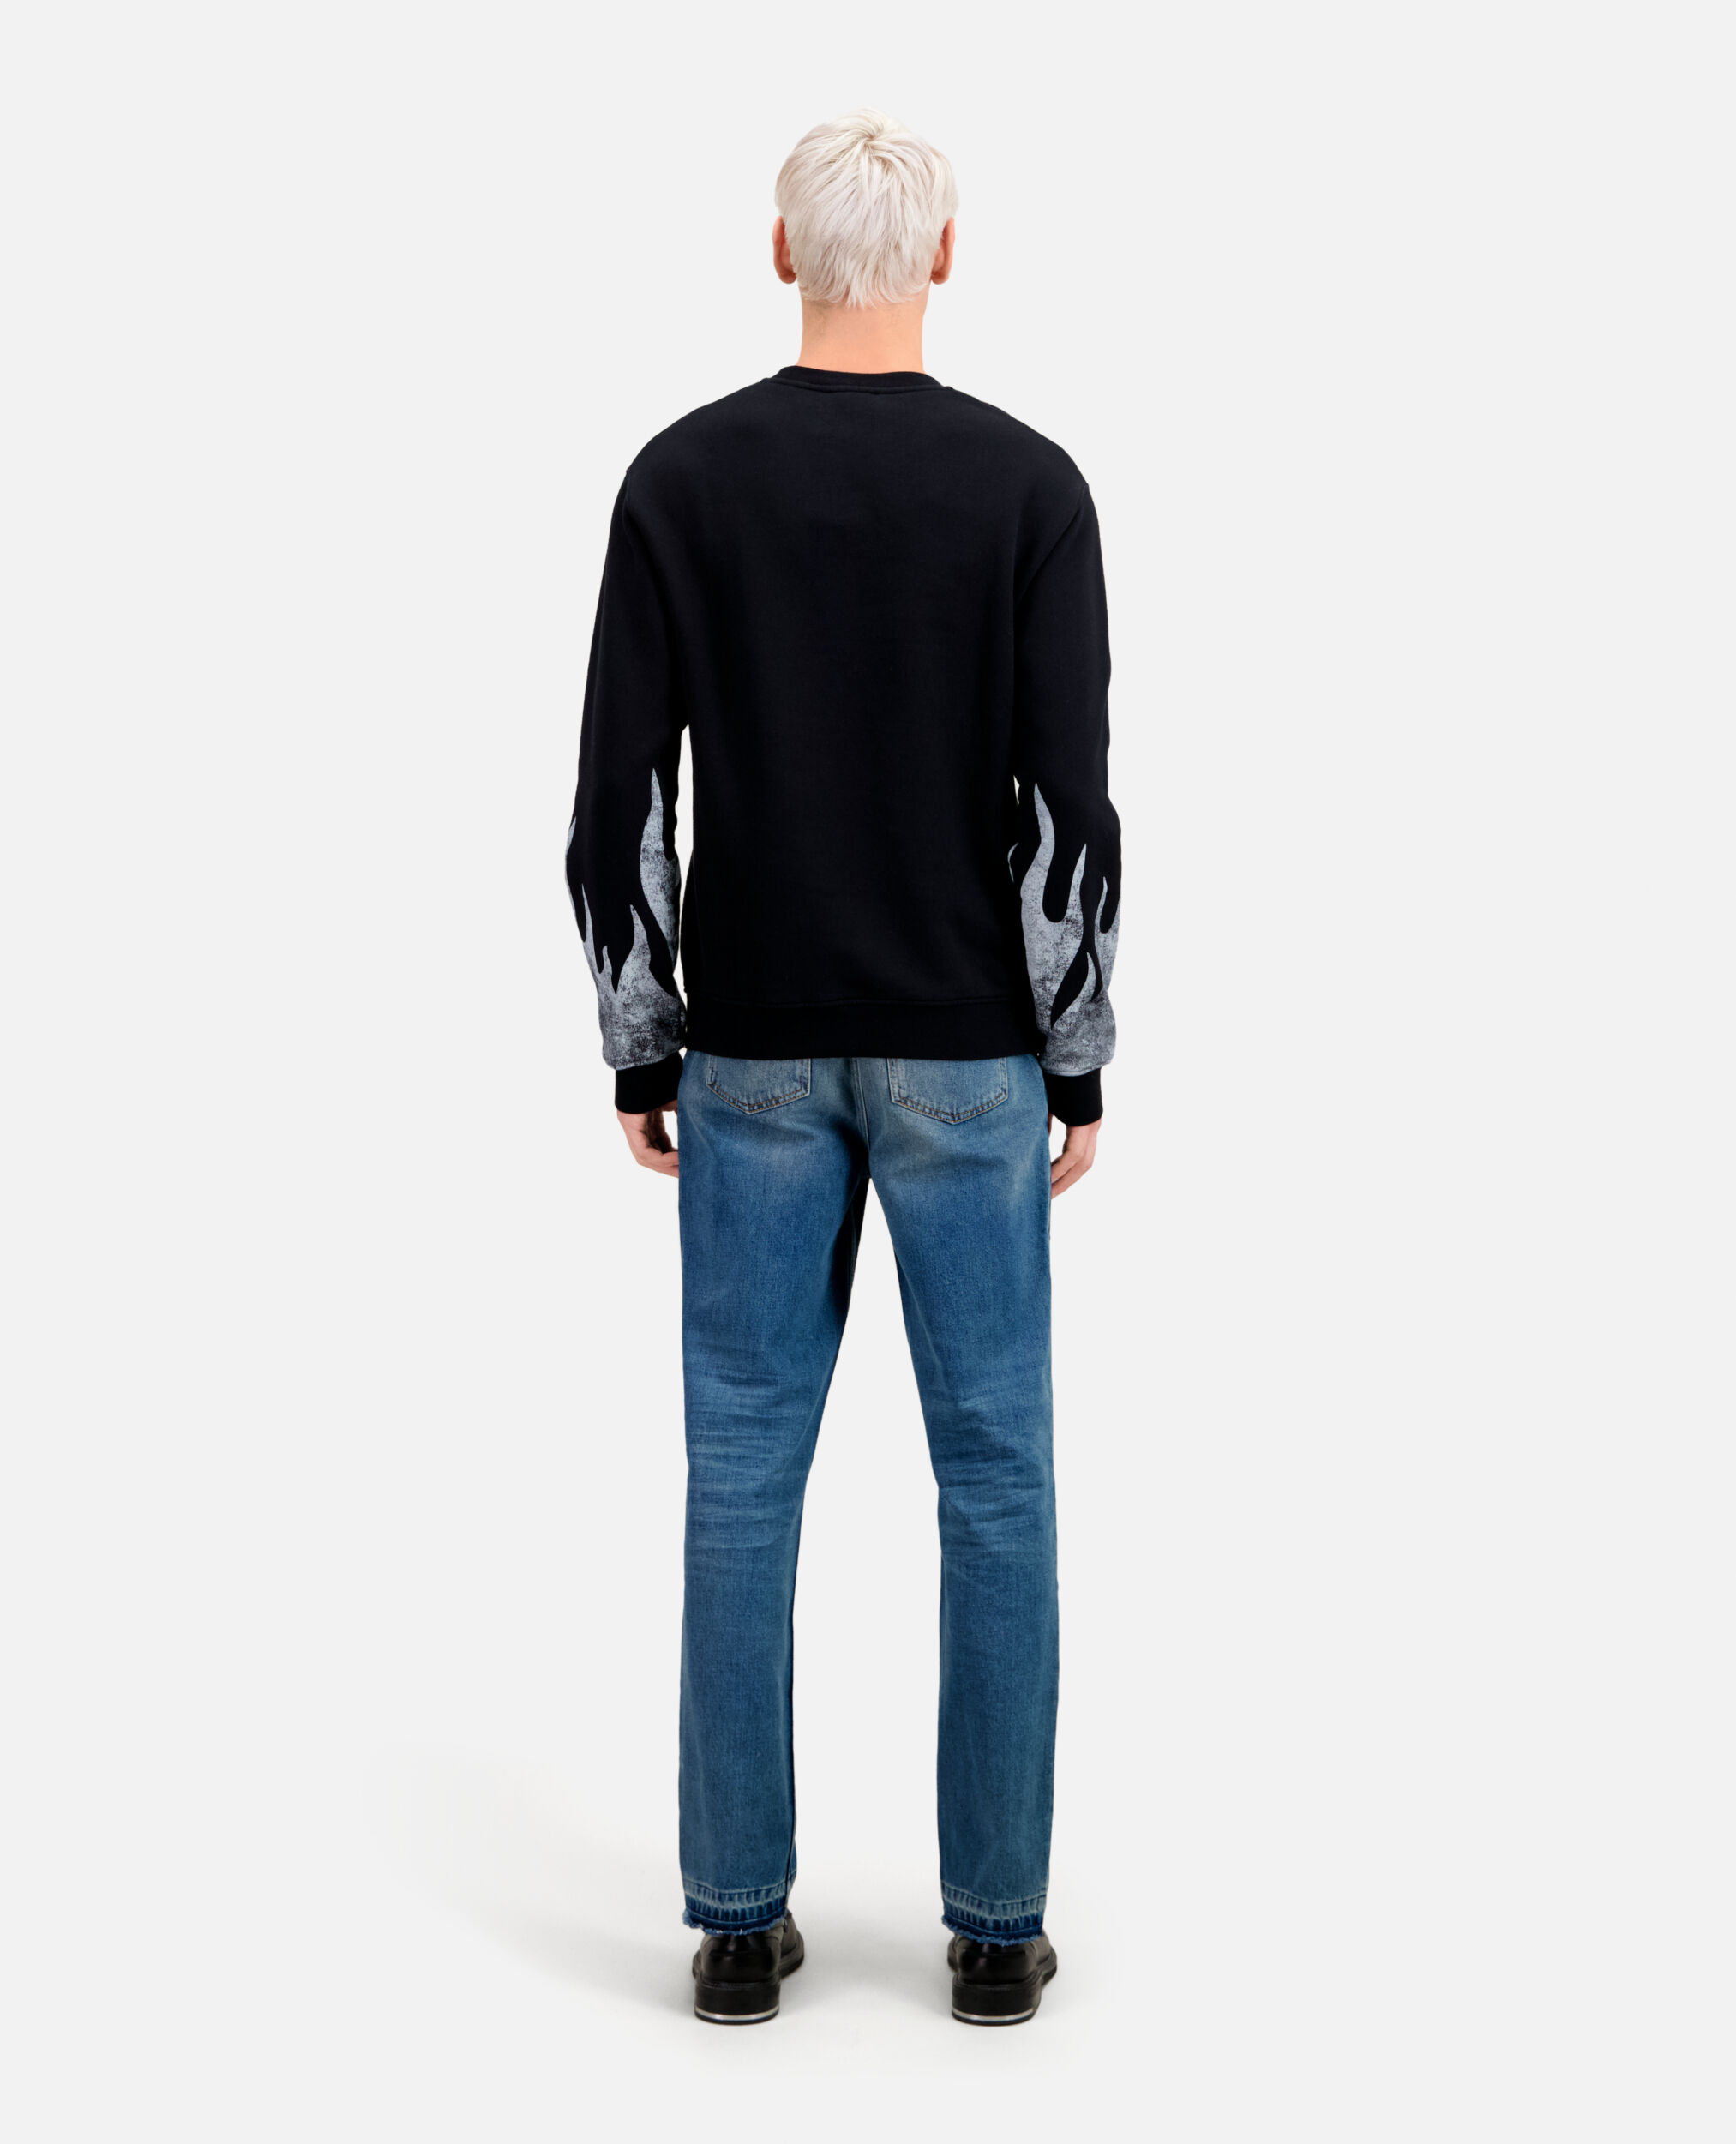 Herren Schwarzes Sweatshirt mit Siebdruck, BLACK, hi-res image number null